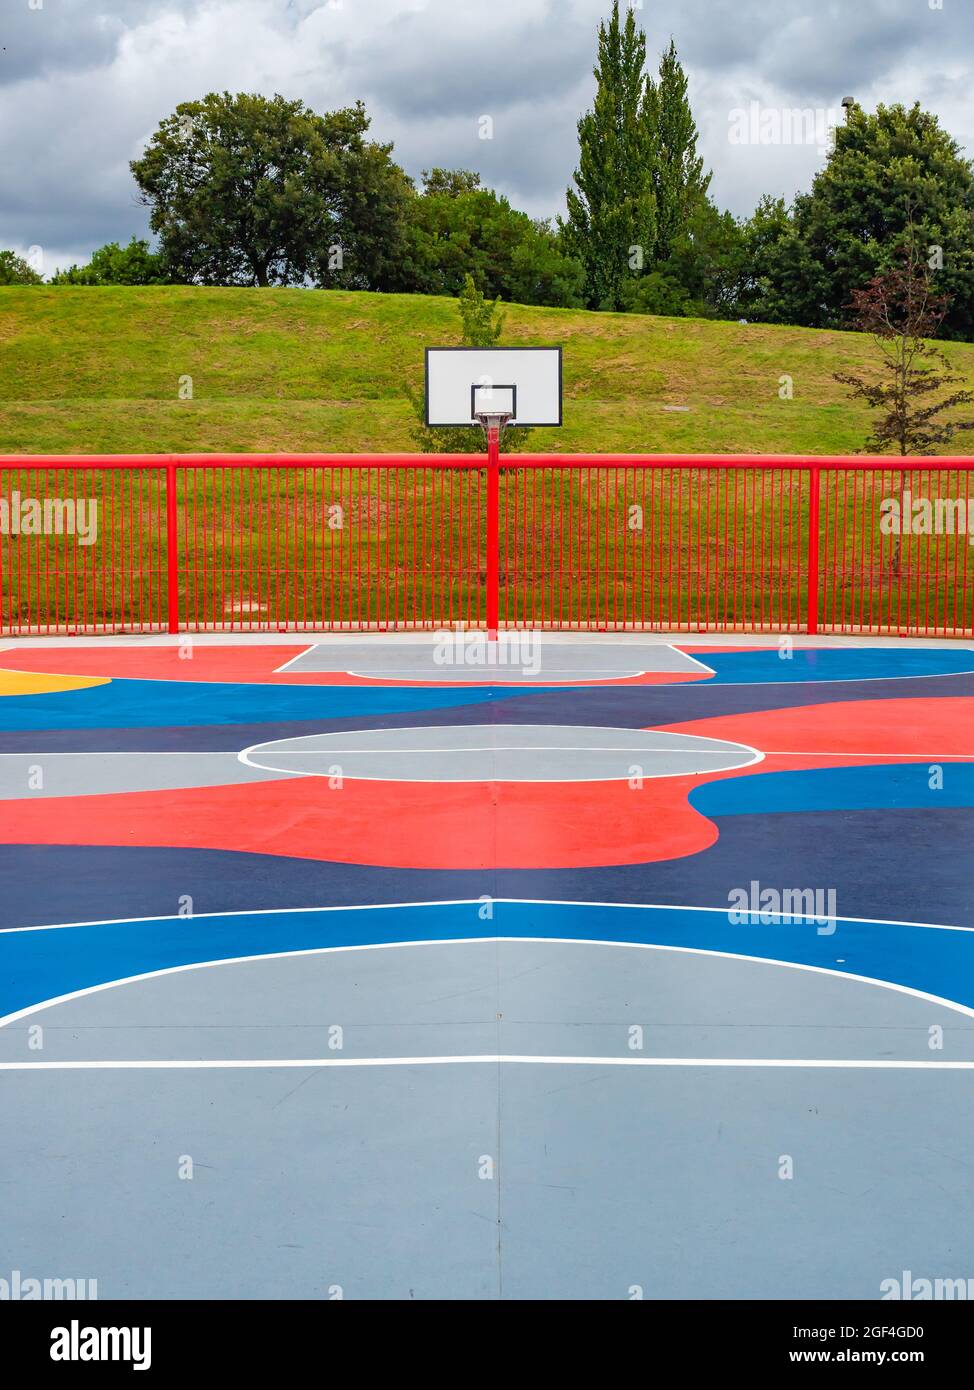 Terrain de basket-ball coloré agréable Photo Stock - Alamy